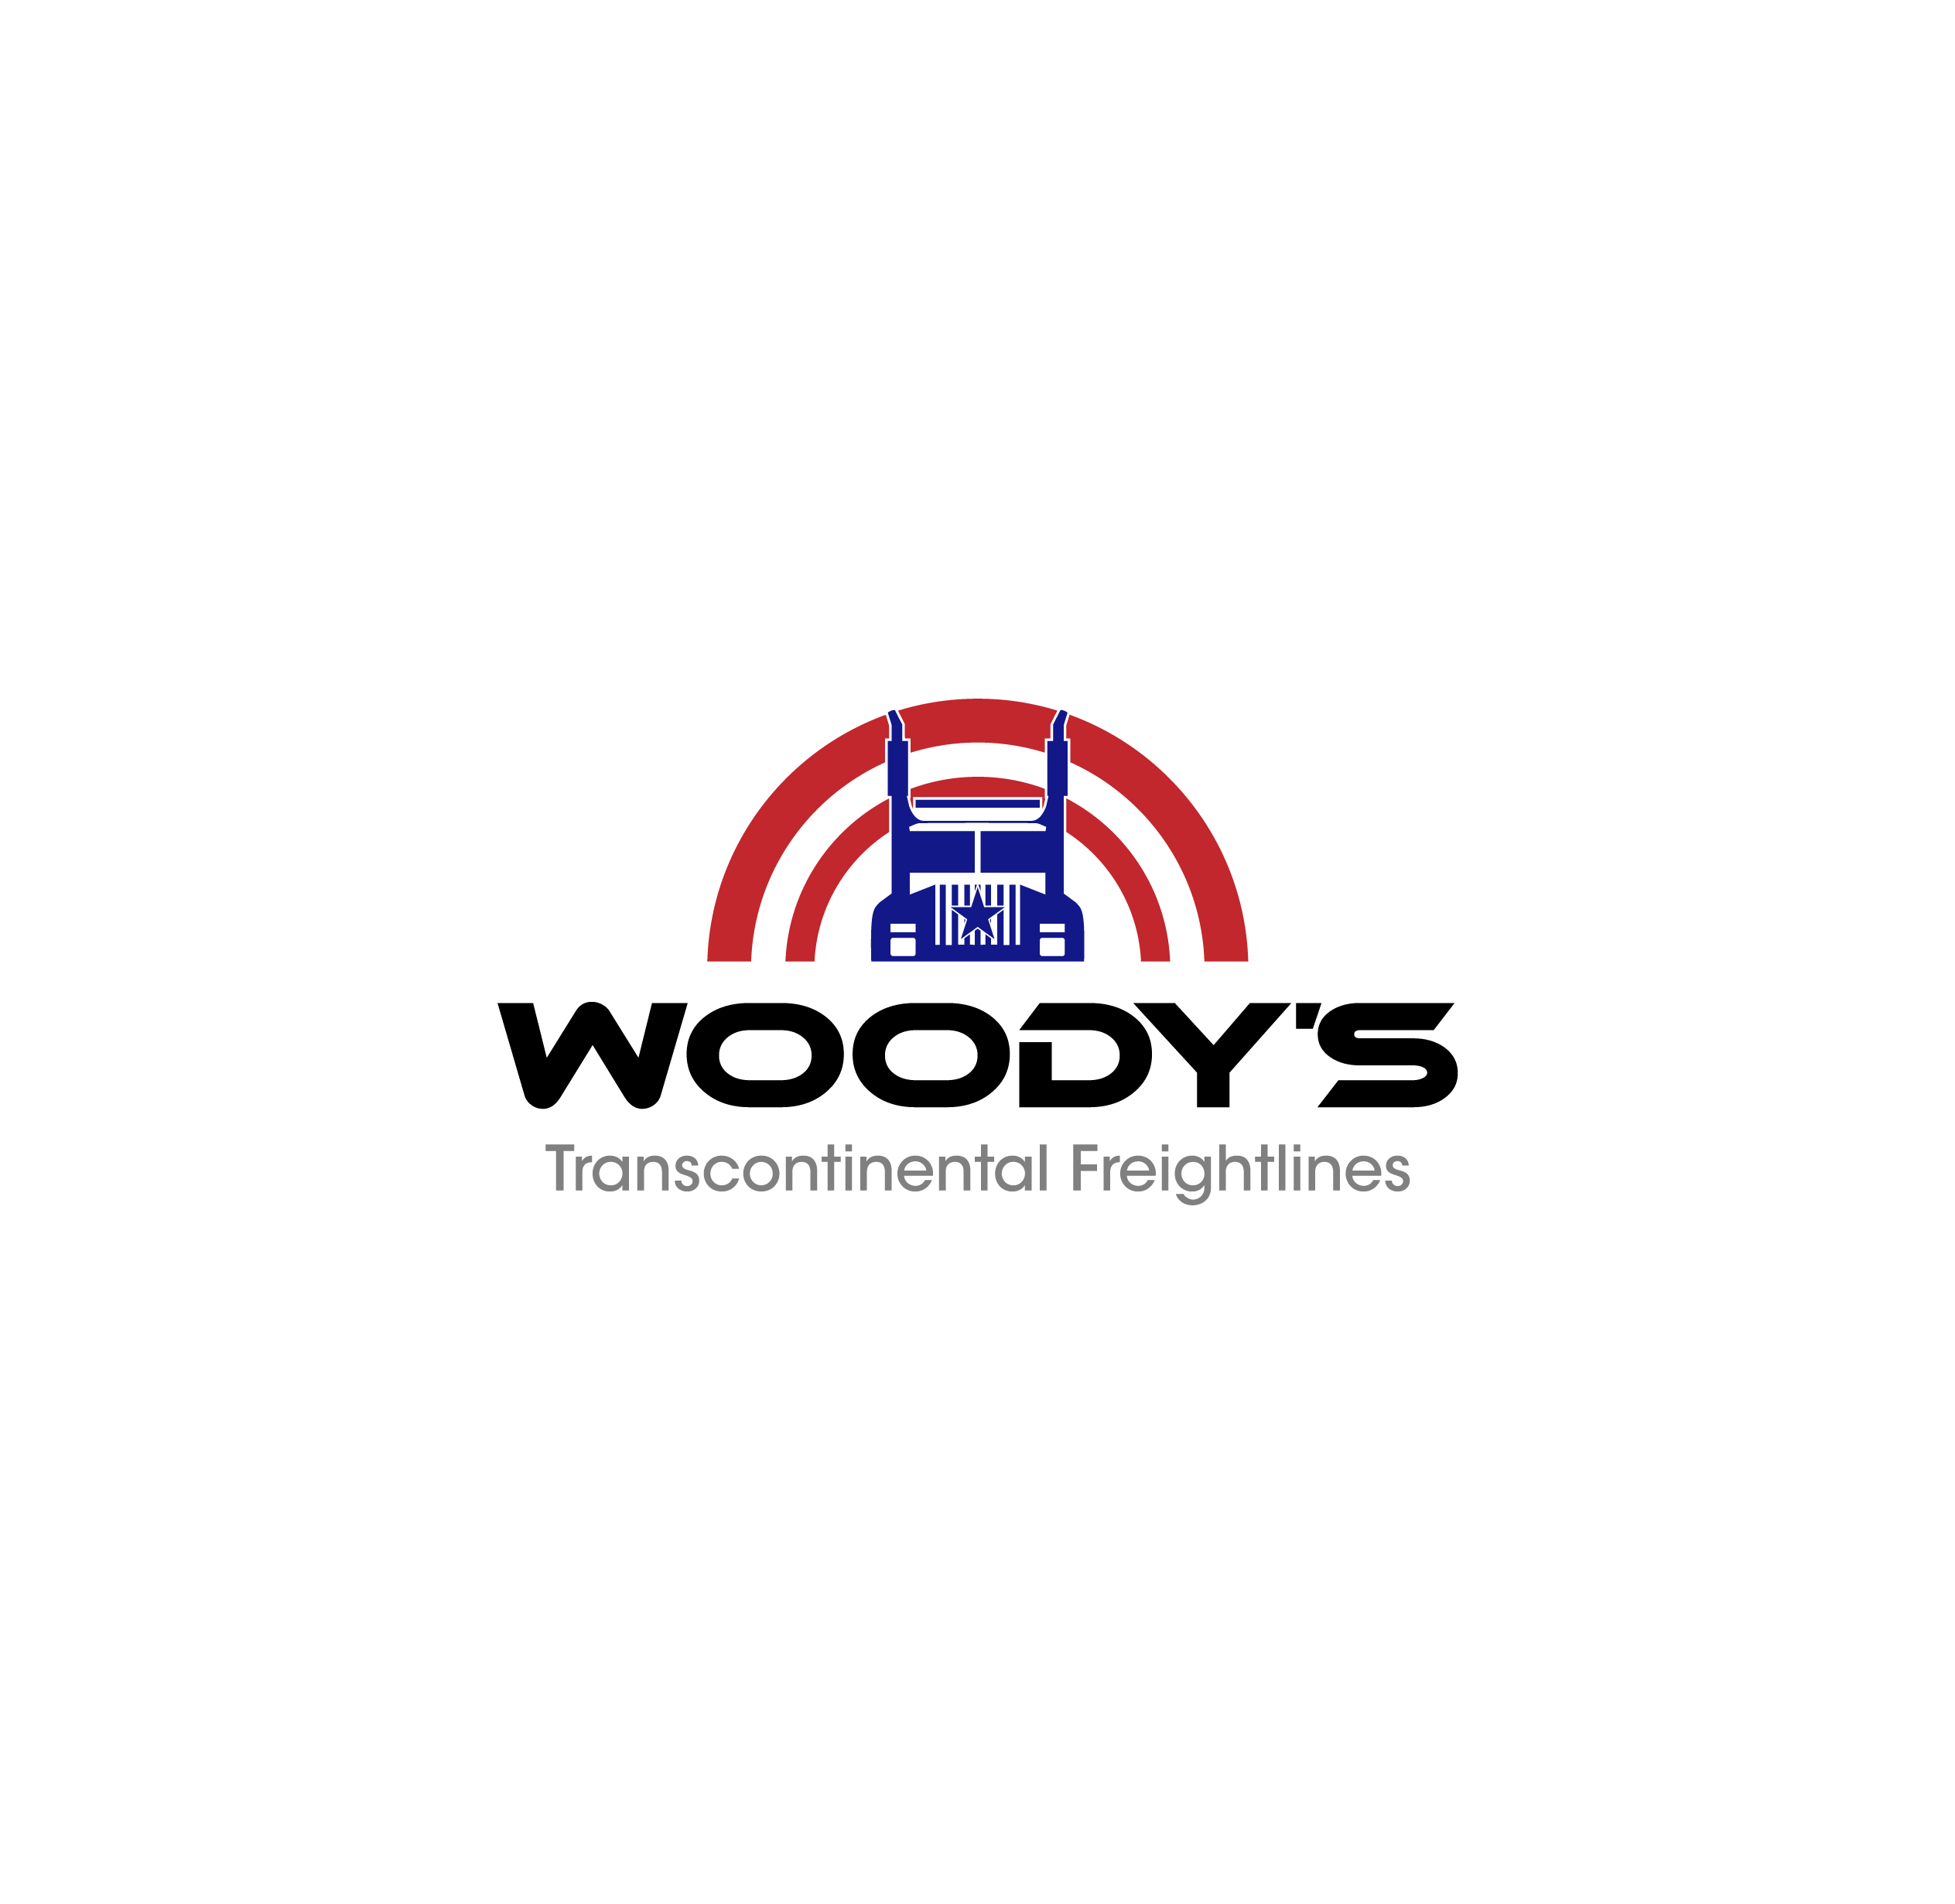 Creative Truck Company Logo - Logo Design Contests Creative Logo Design for Woody's